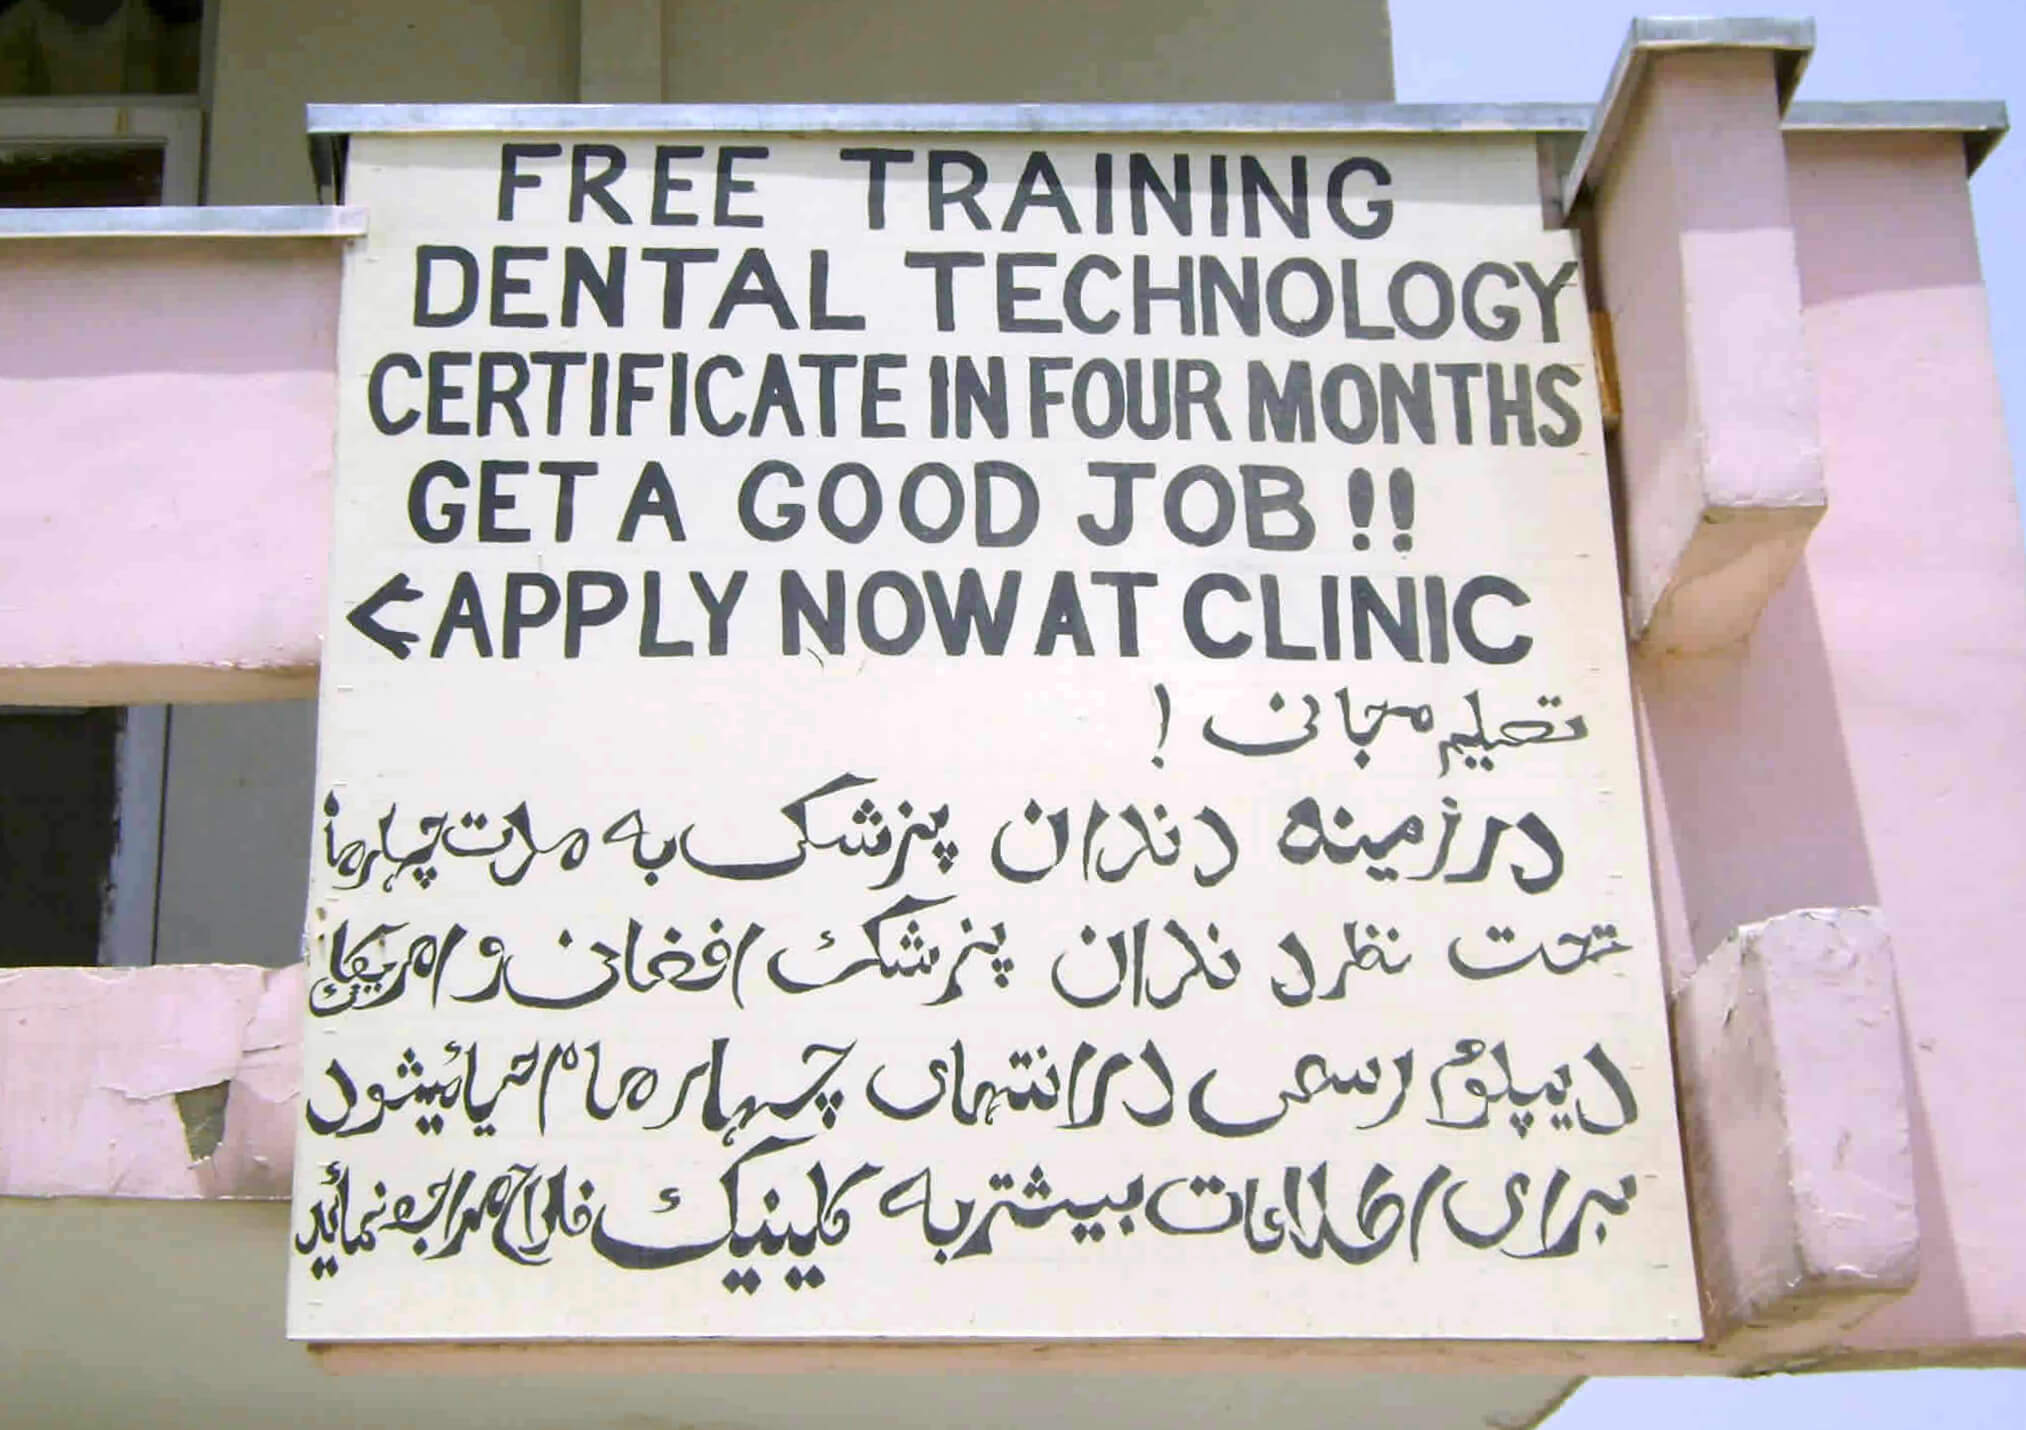 ADRP Dental Training Sign